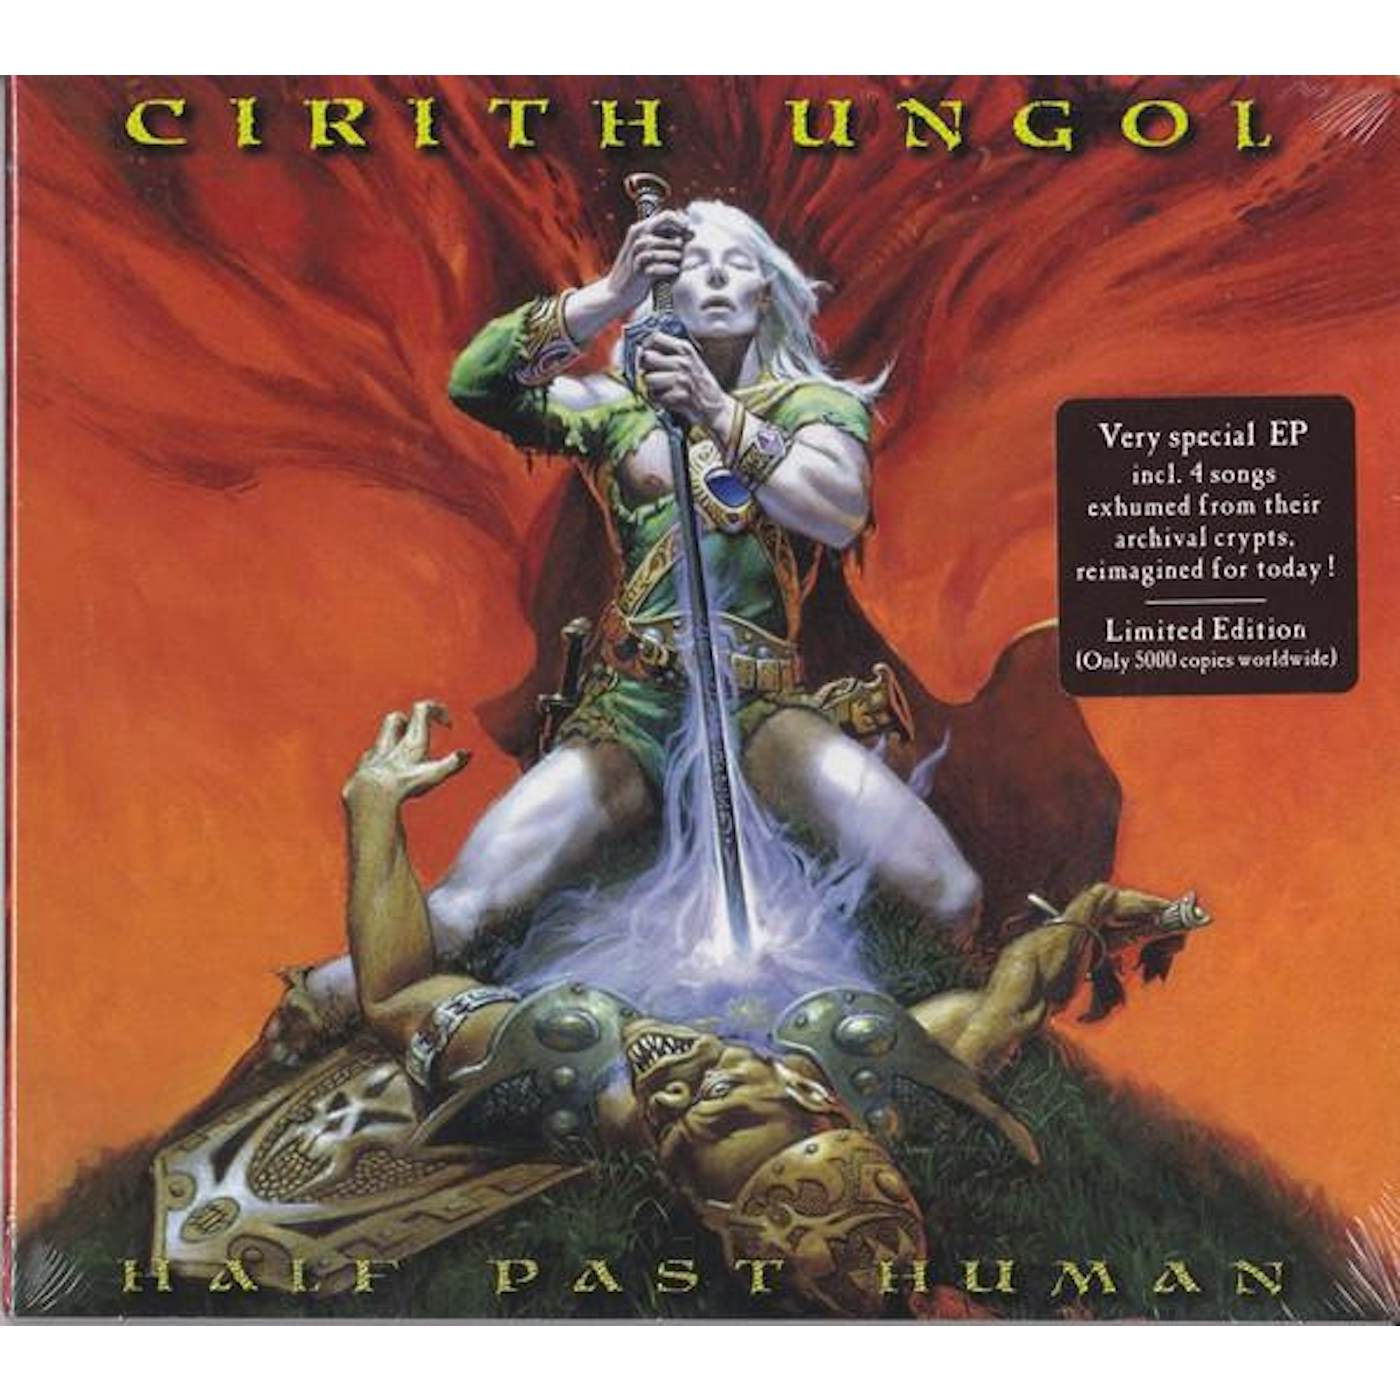 Cirith Ungol HALF PAST HUMAN CD